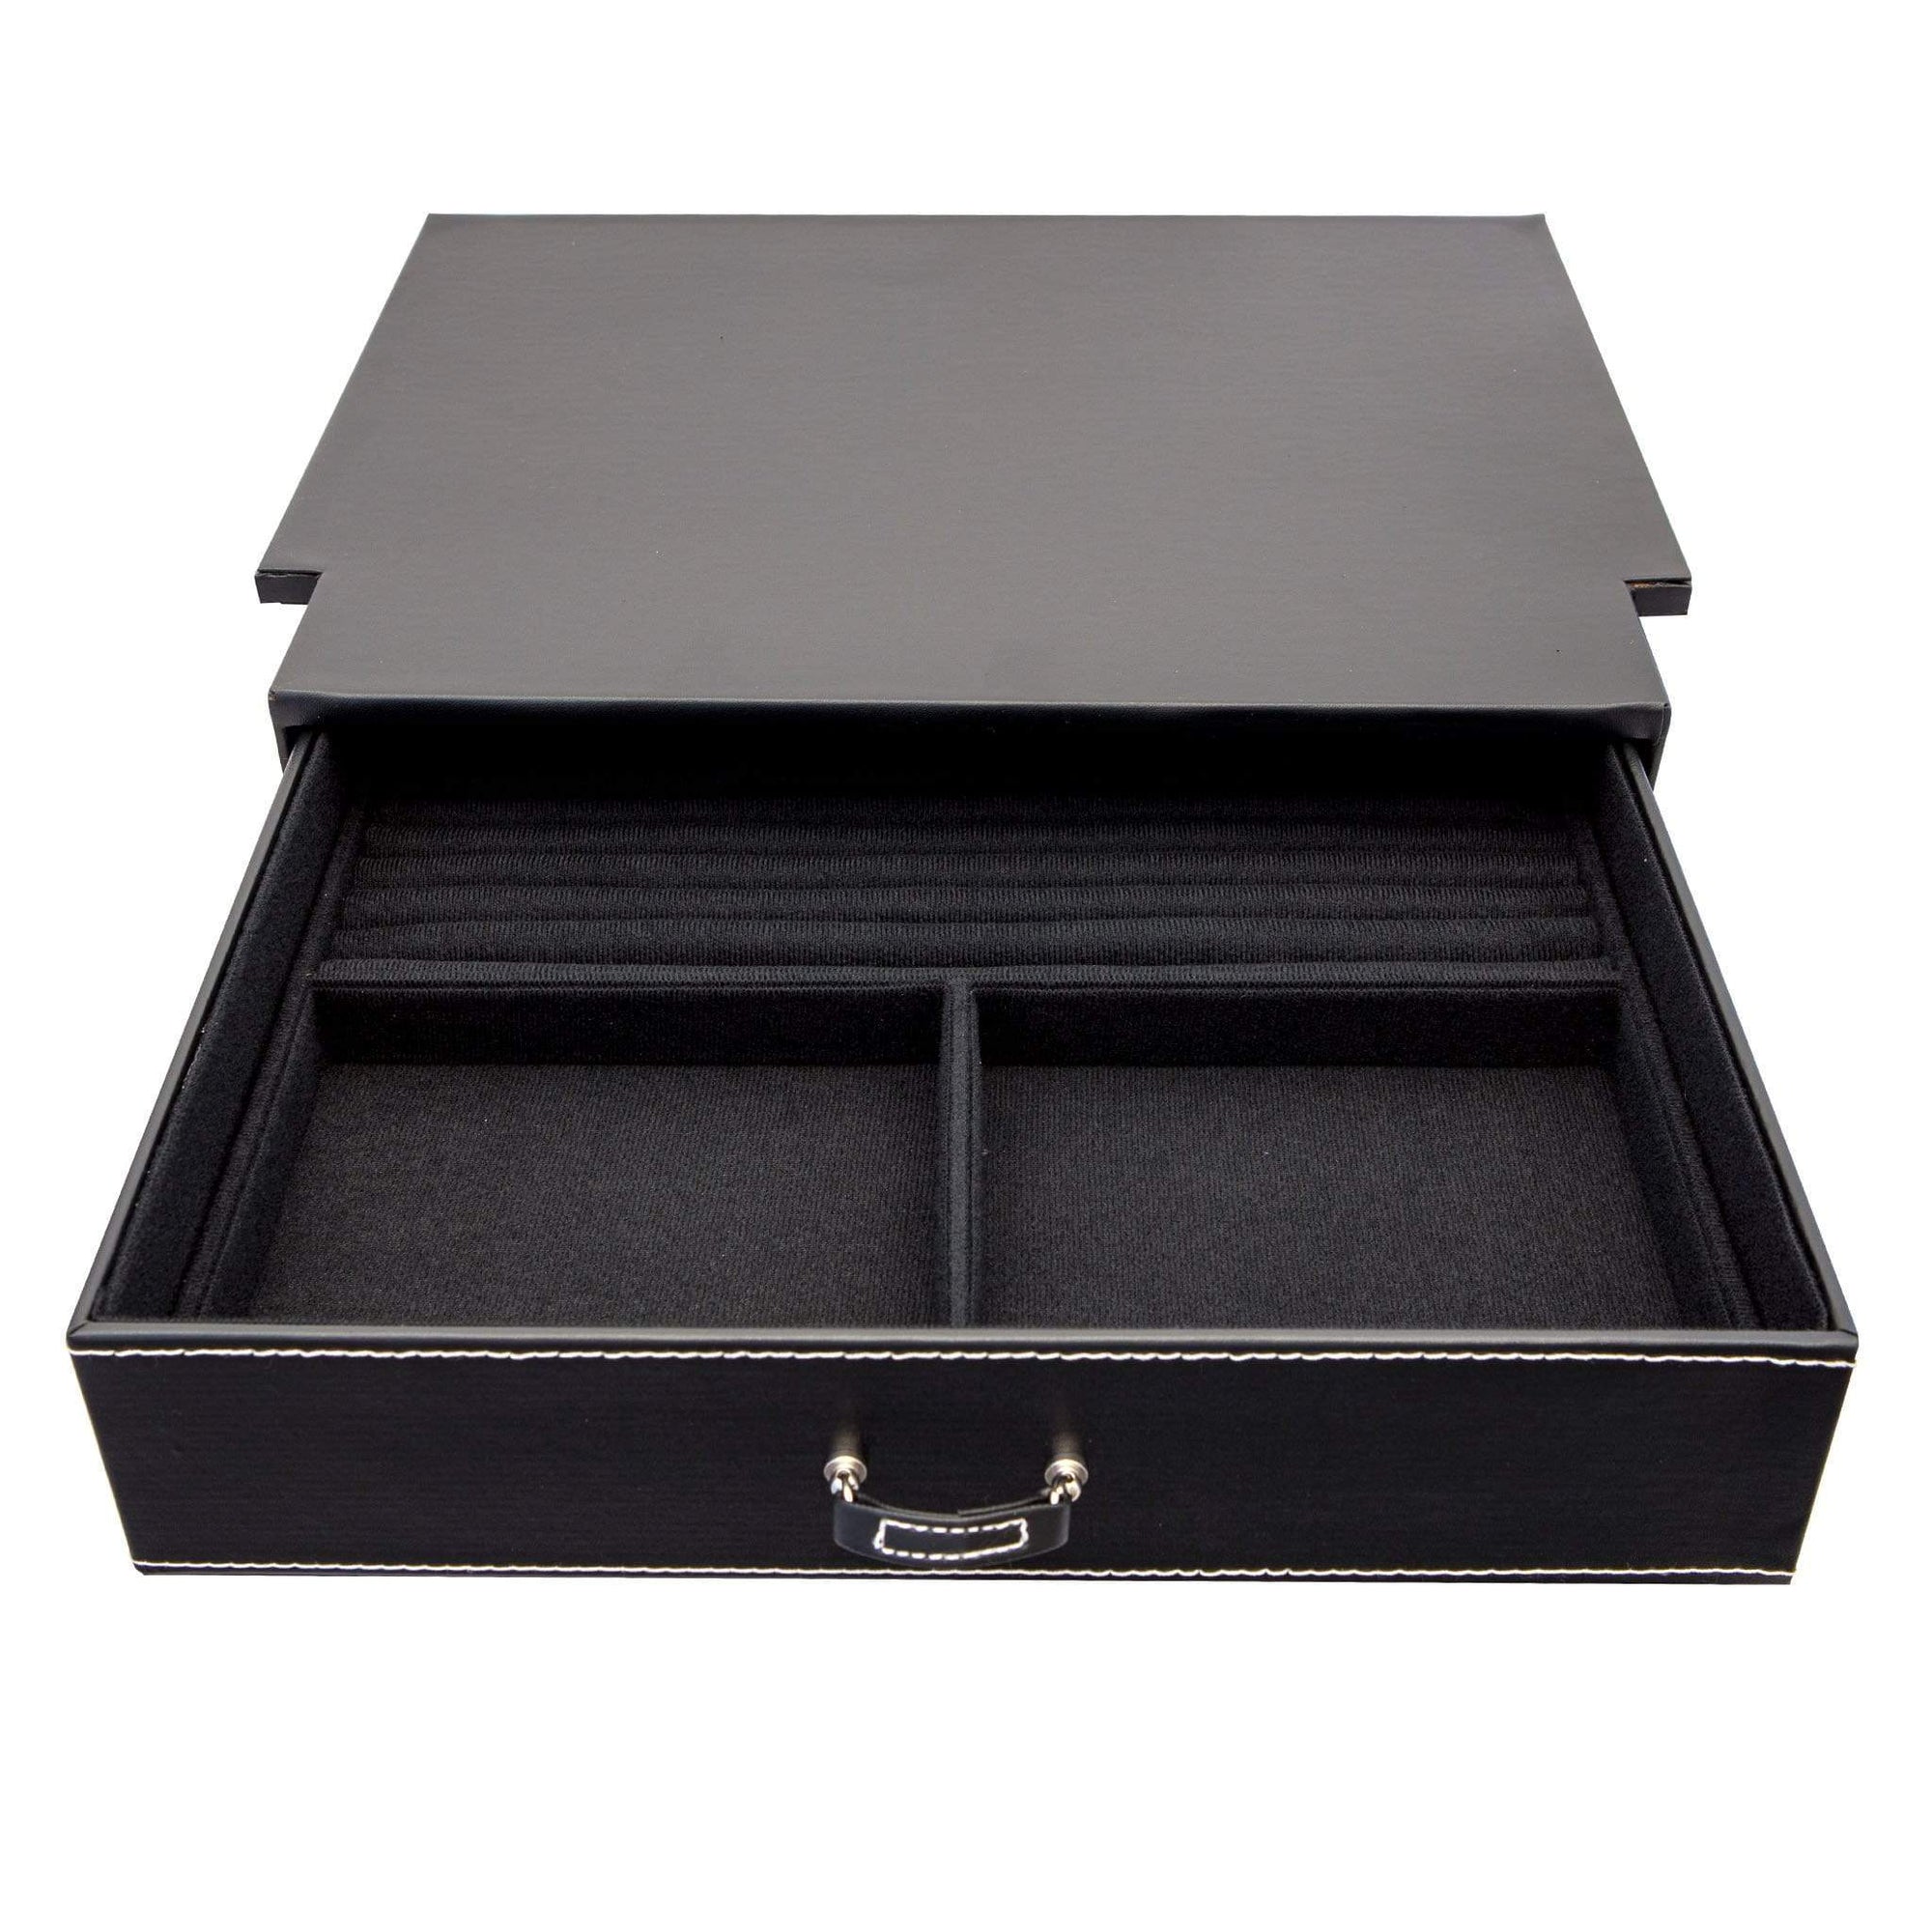 Accessory - storage - jewelry drawer - 15 inch - under shelf mount - 50 size safes -  MODLOCK